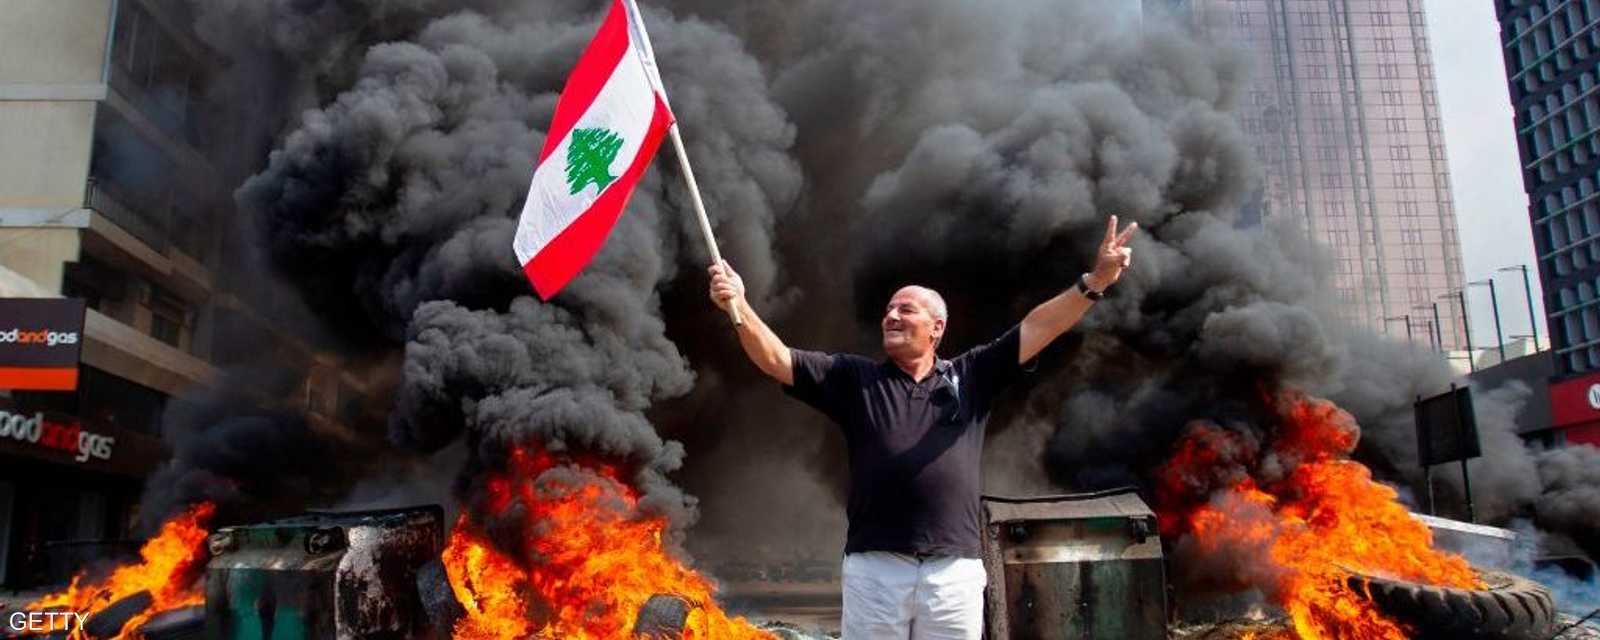 احتجاجات ضخمة قي لبنان